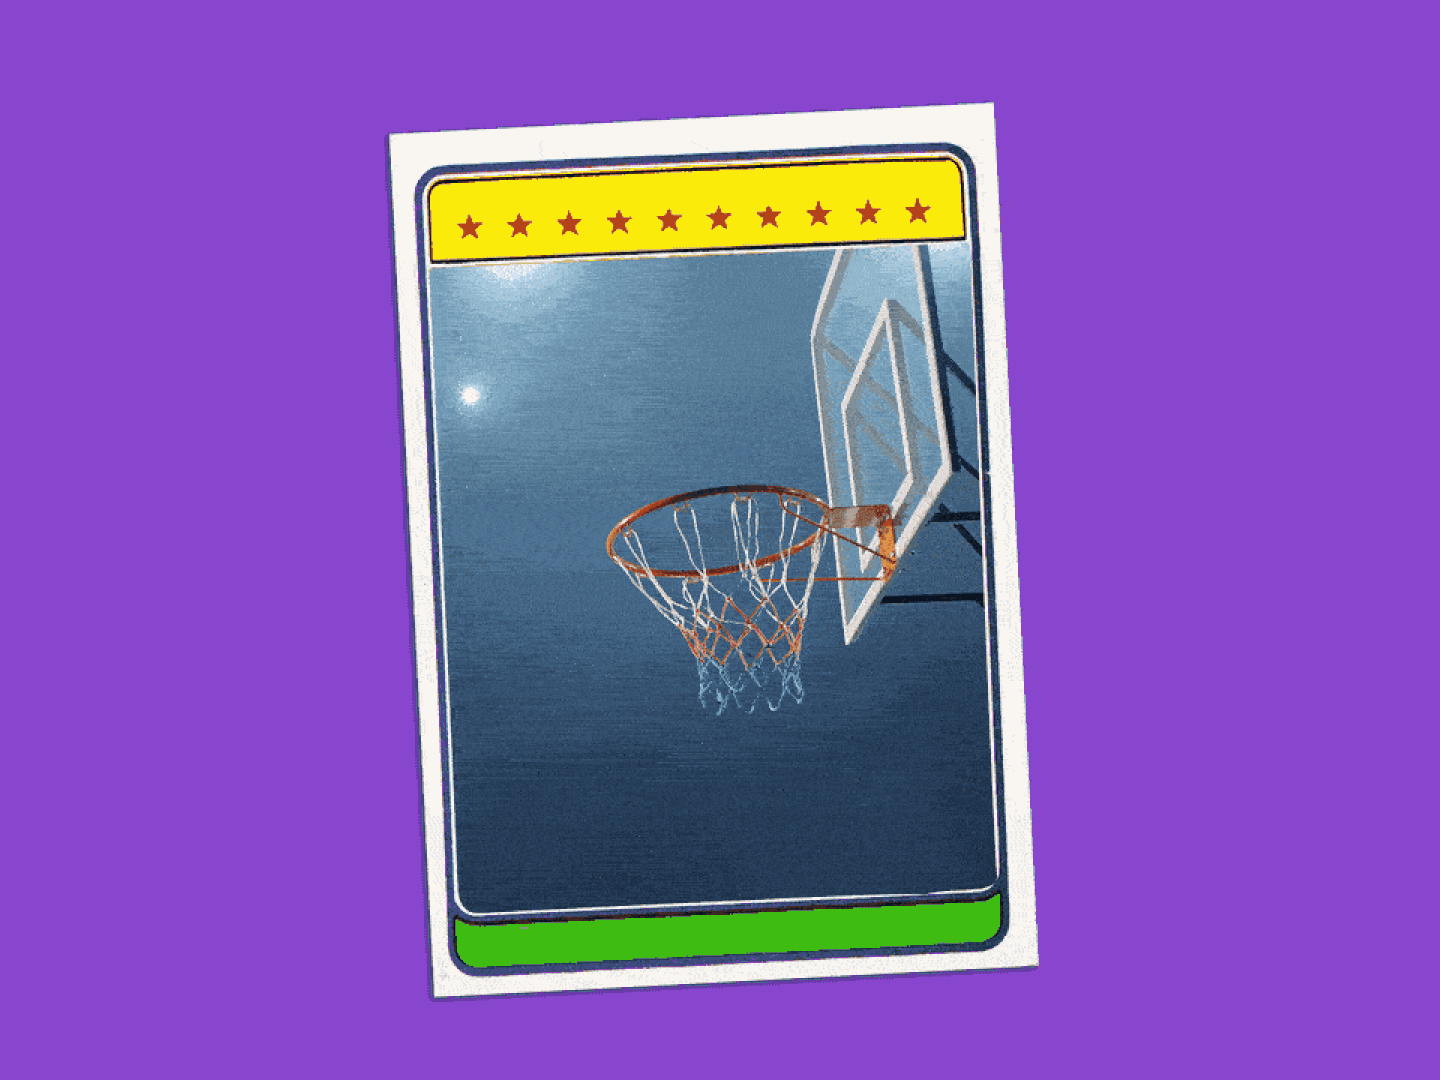 Download Kobe Bryant Cartoon Purple Background Wallpaper